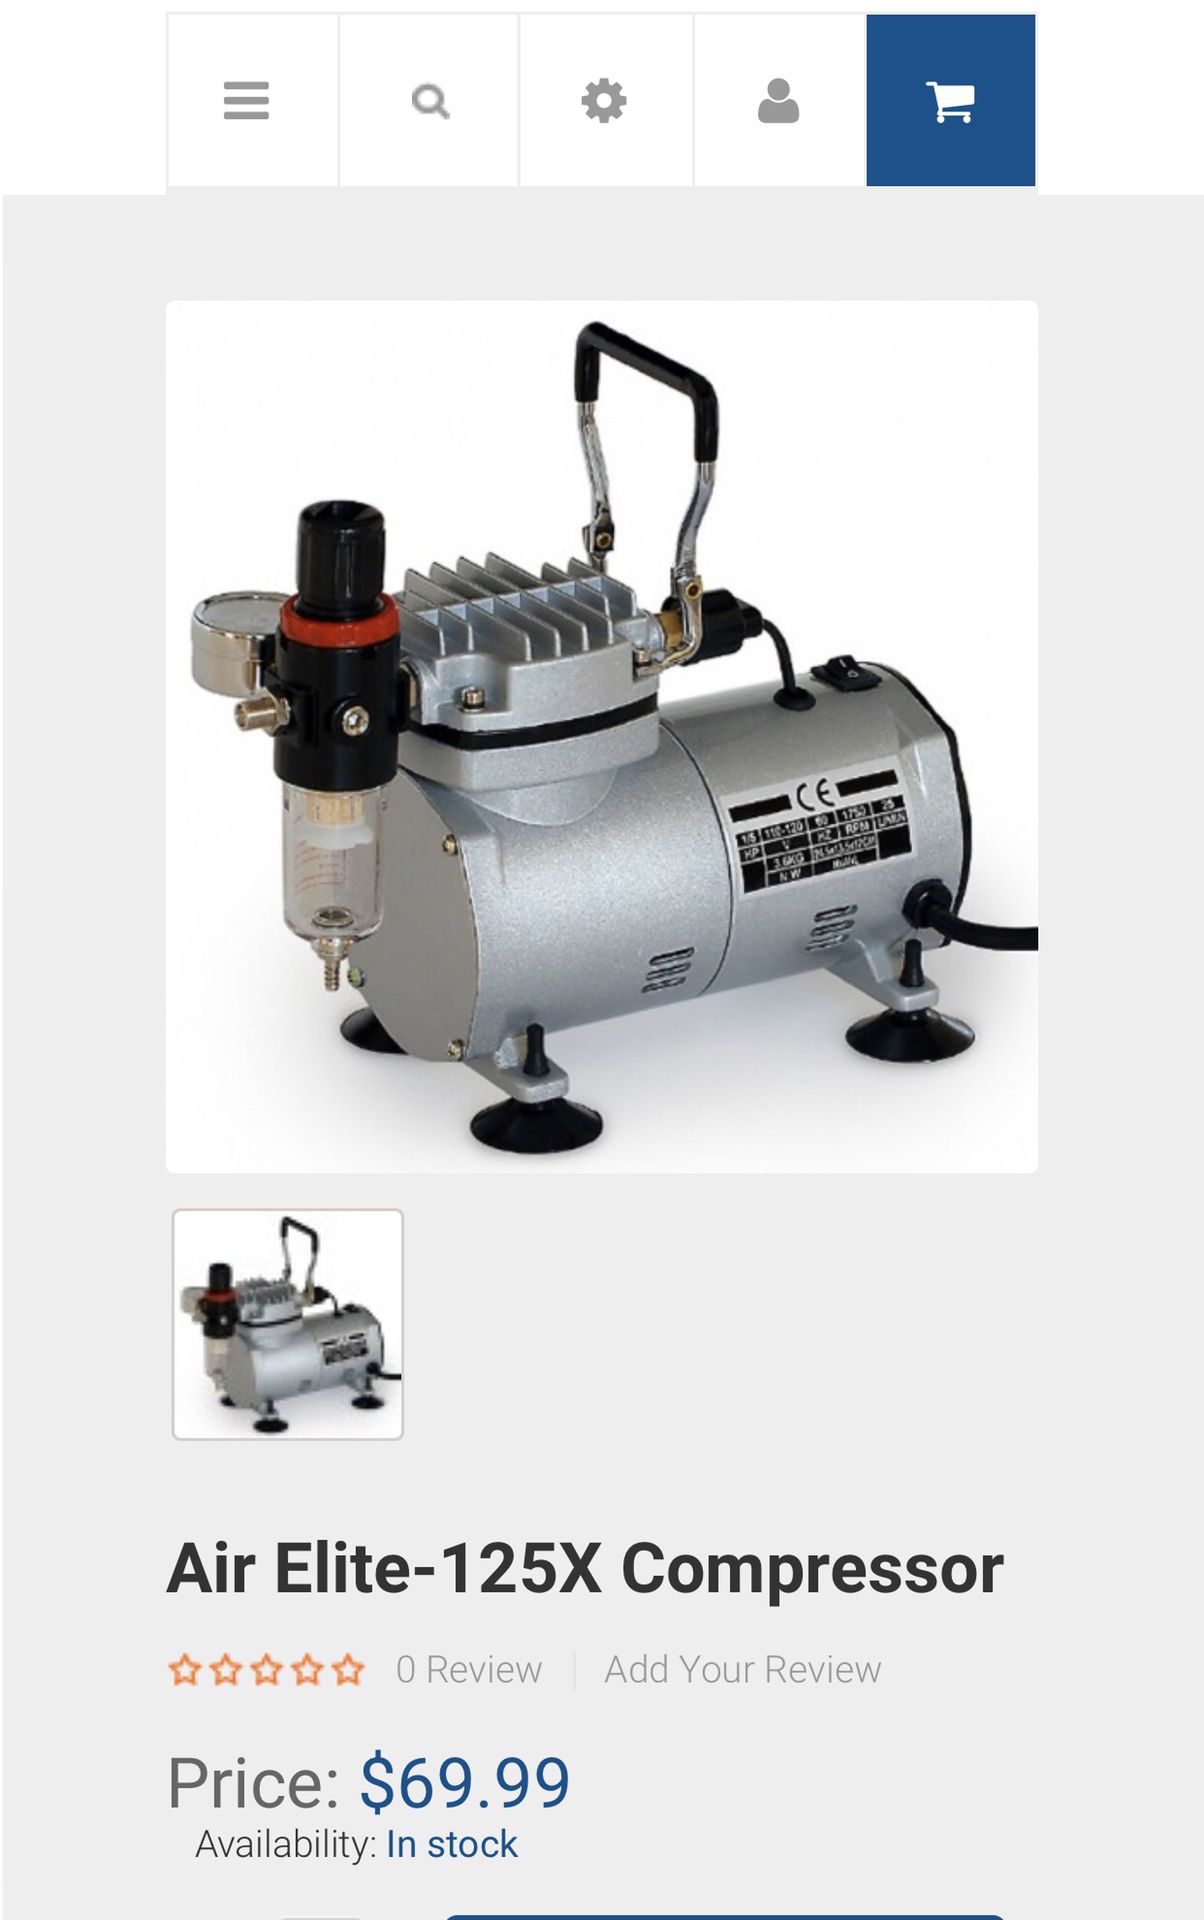 Air Elite-125X Compressor